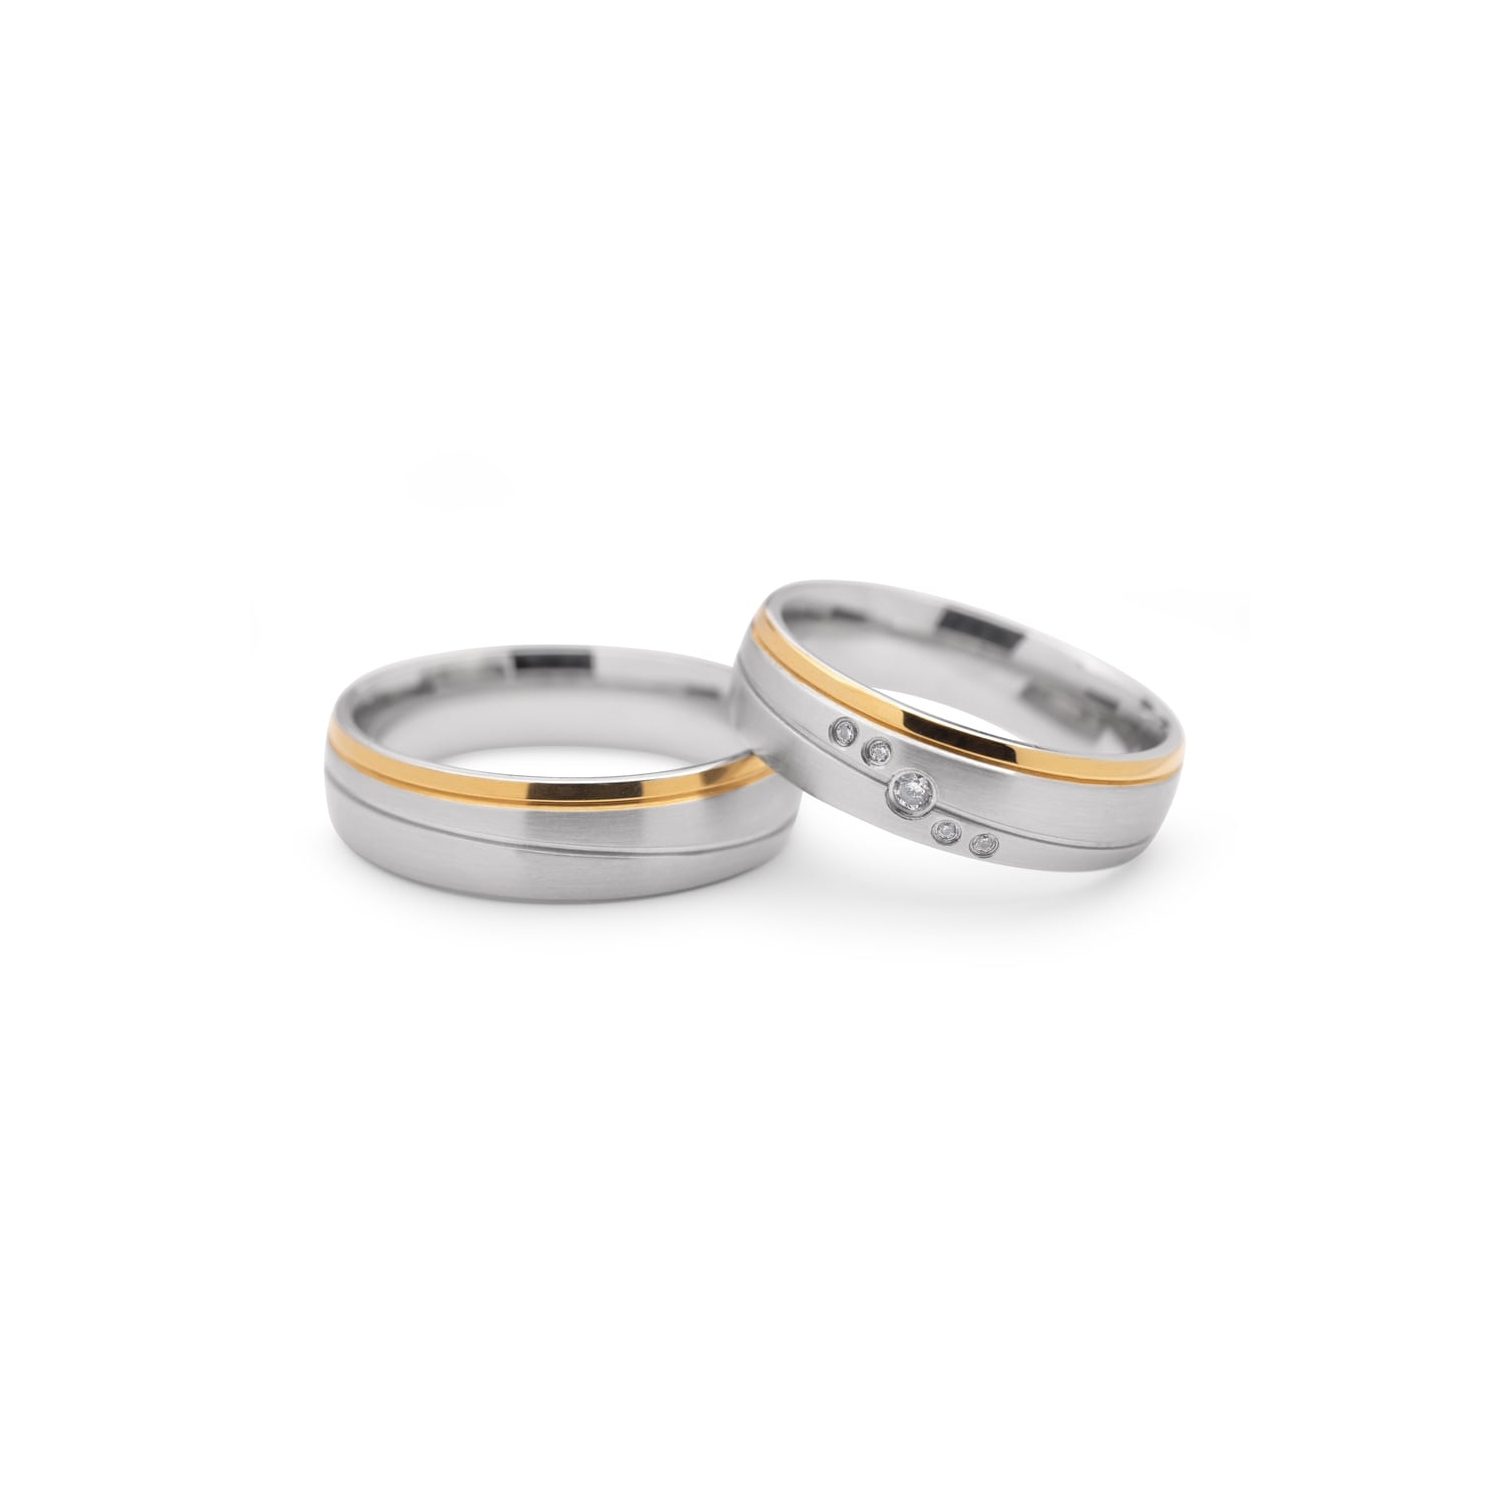 Golden wedding rings with diamonds "VMA 103"